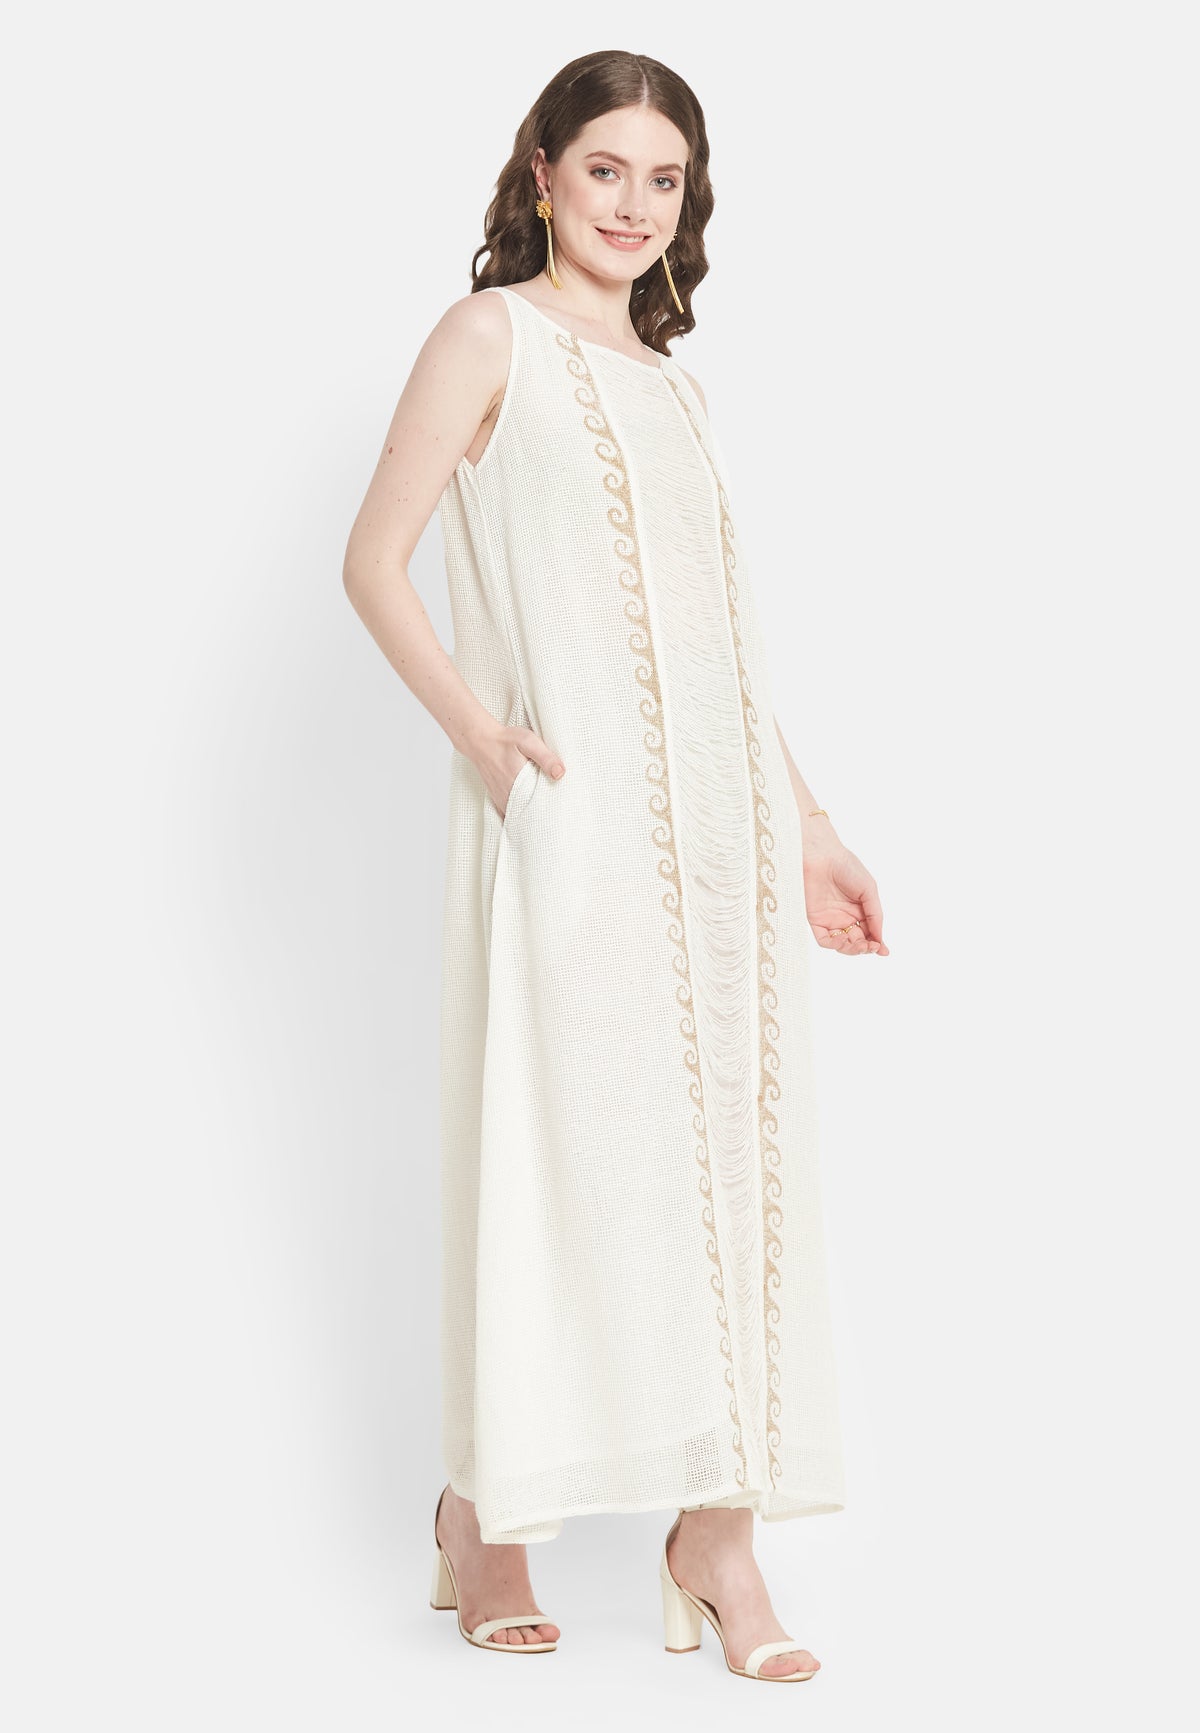 Freya White Dress